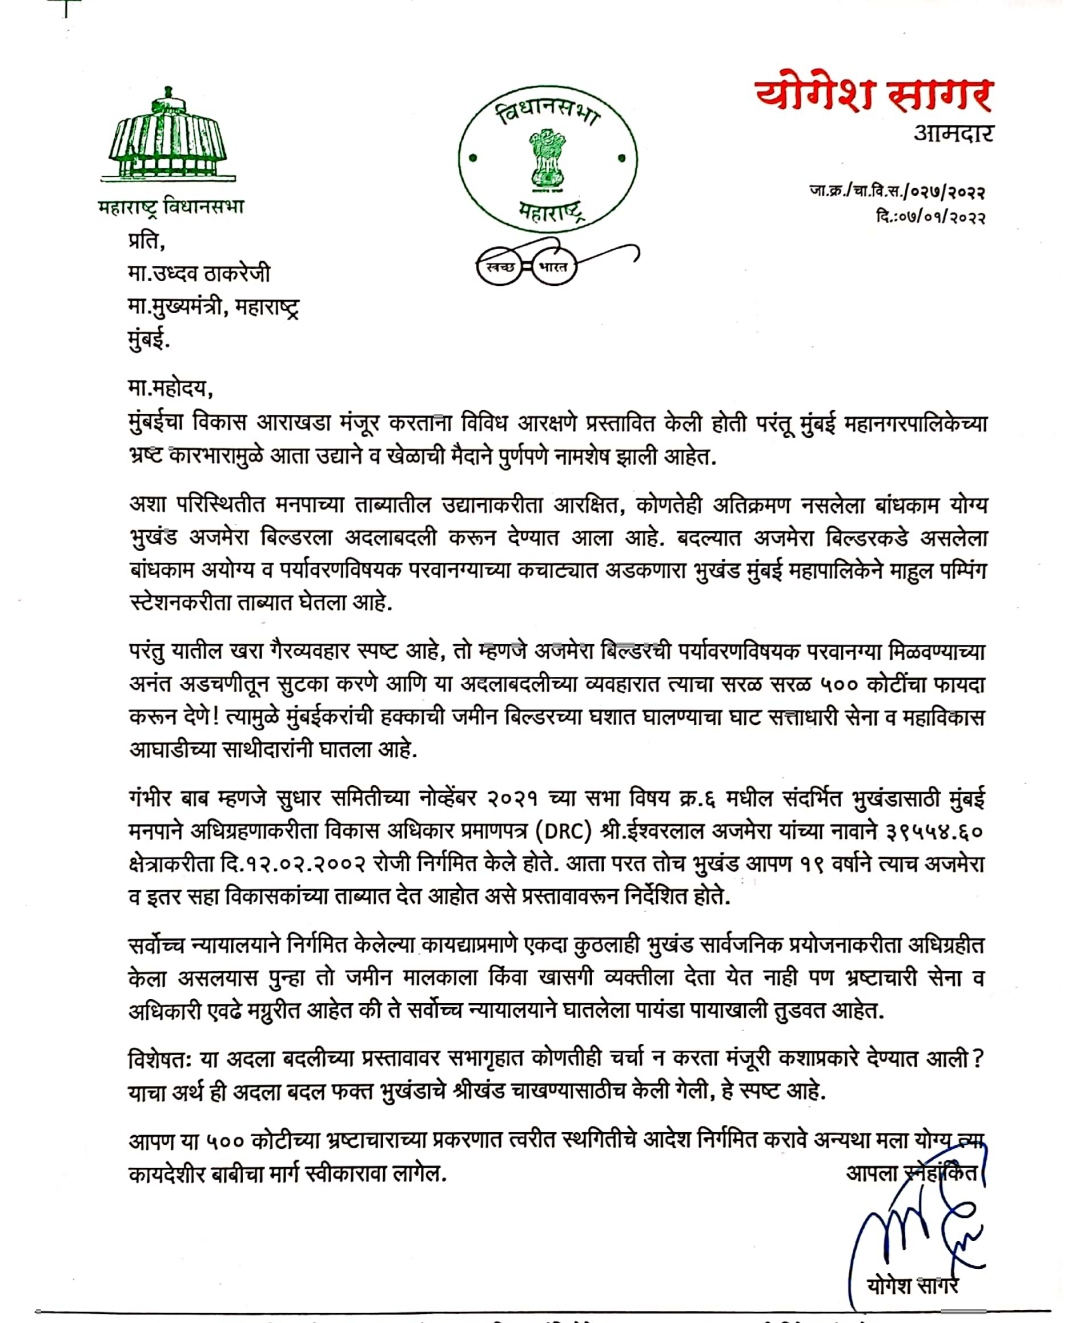 Yogesh Sagar letter of complaint to CM